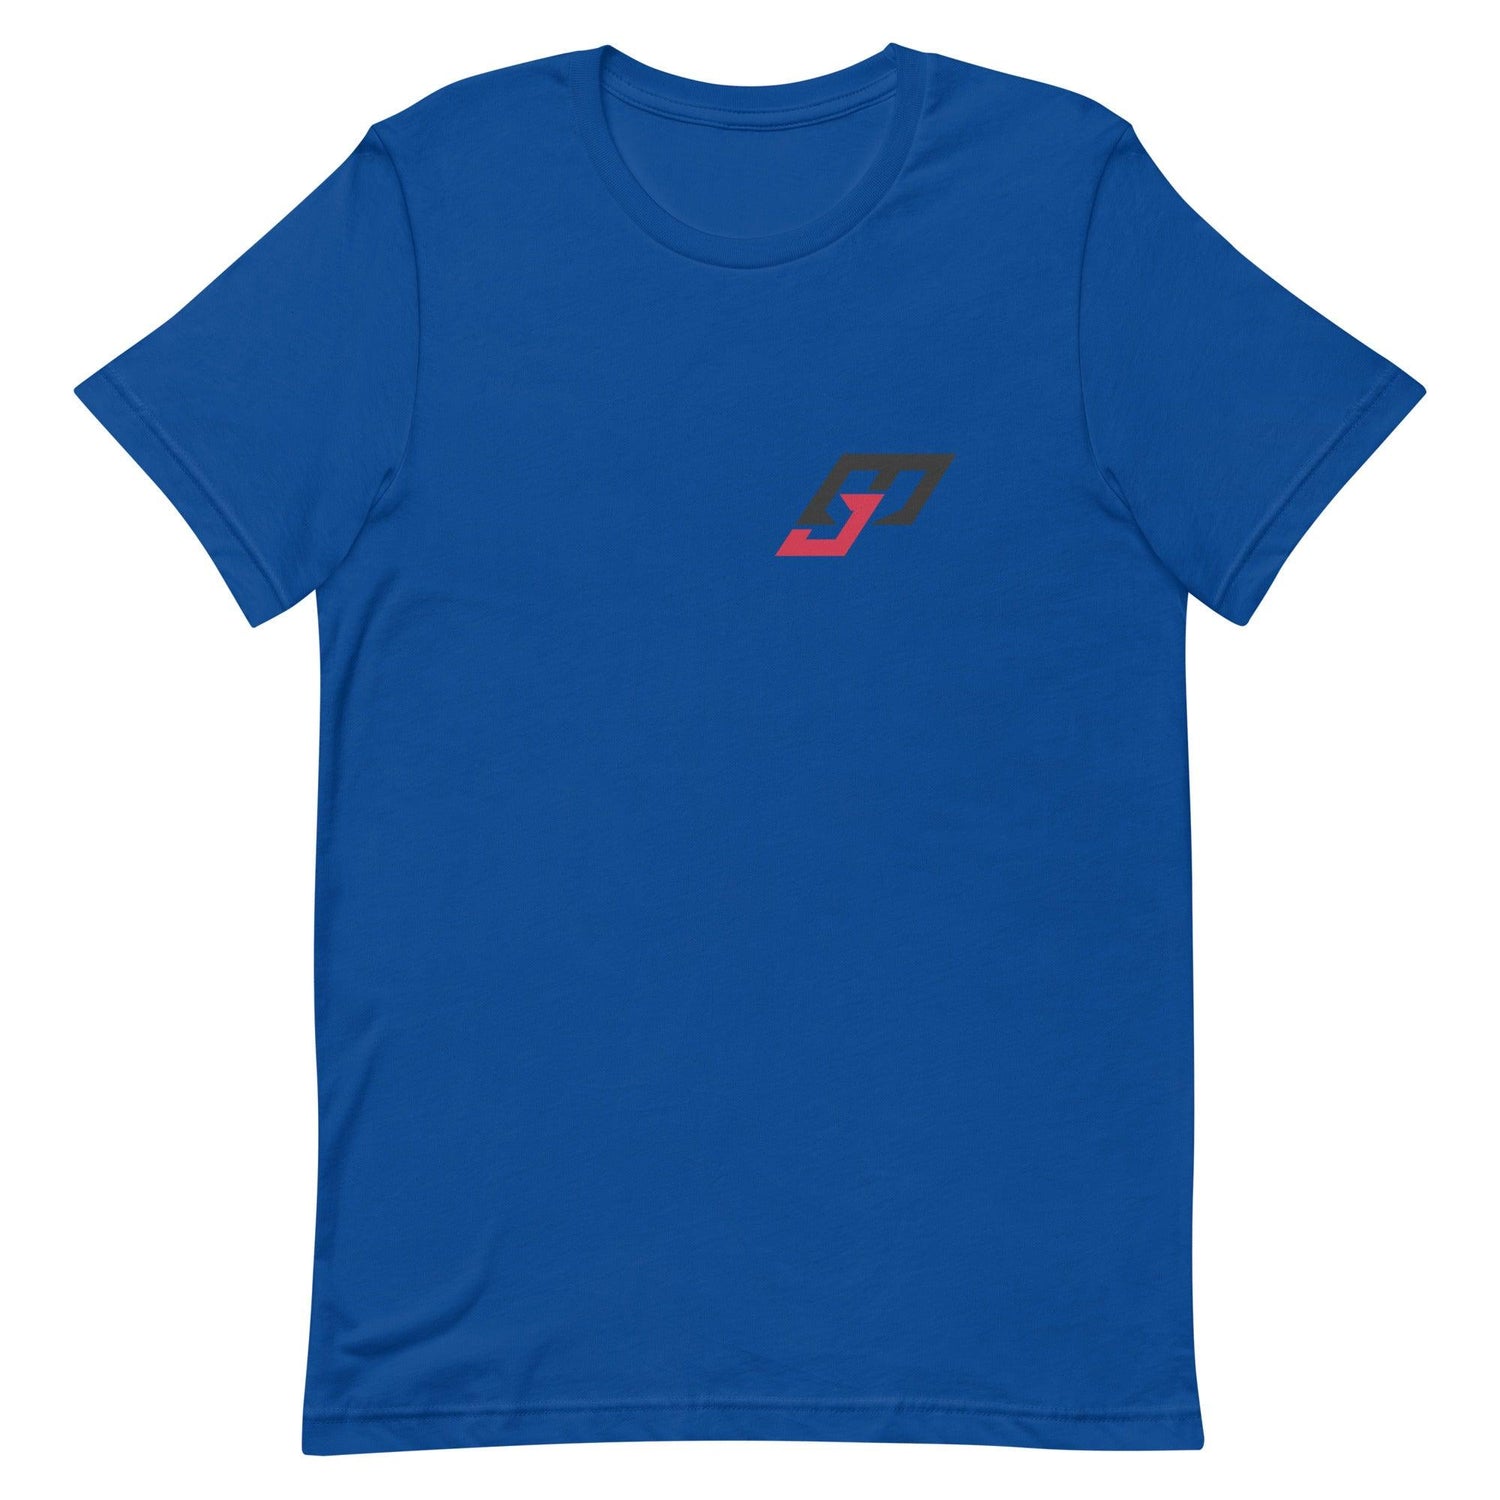 Jackson Miller “JM” t-shirt - Fan Arch